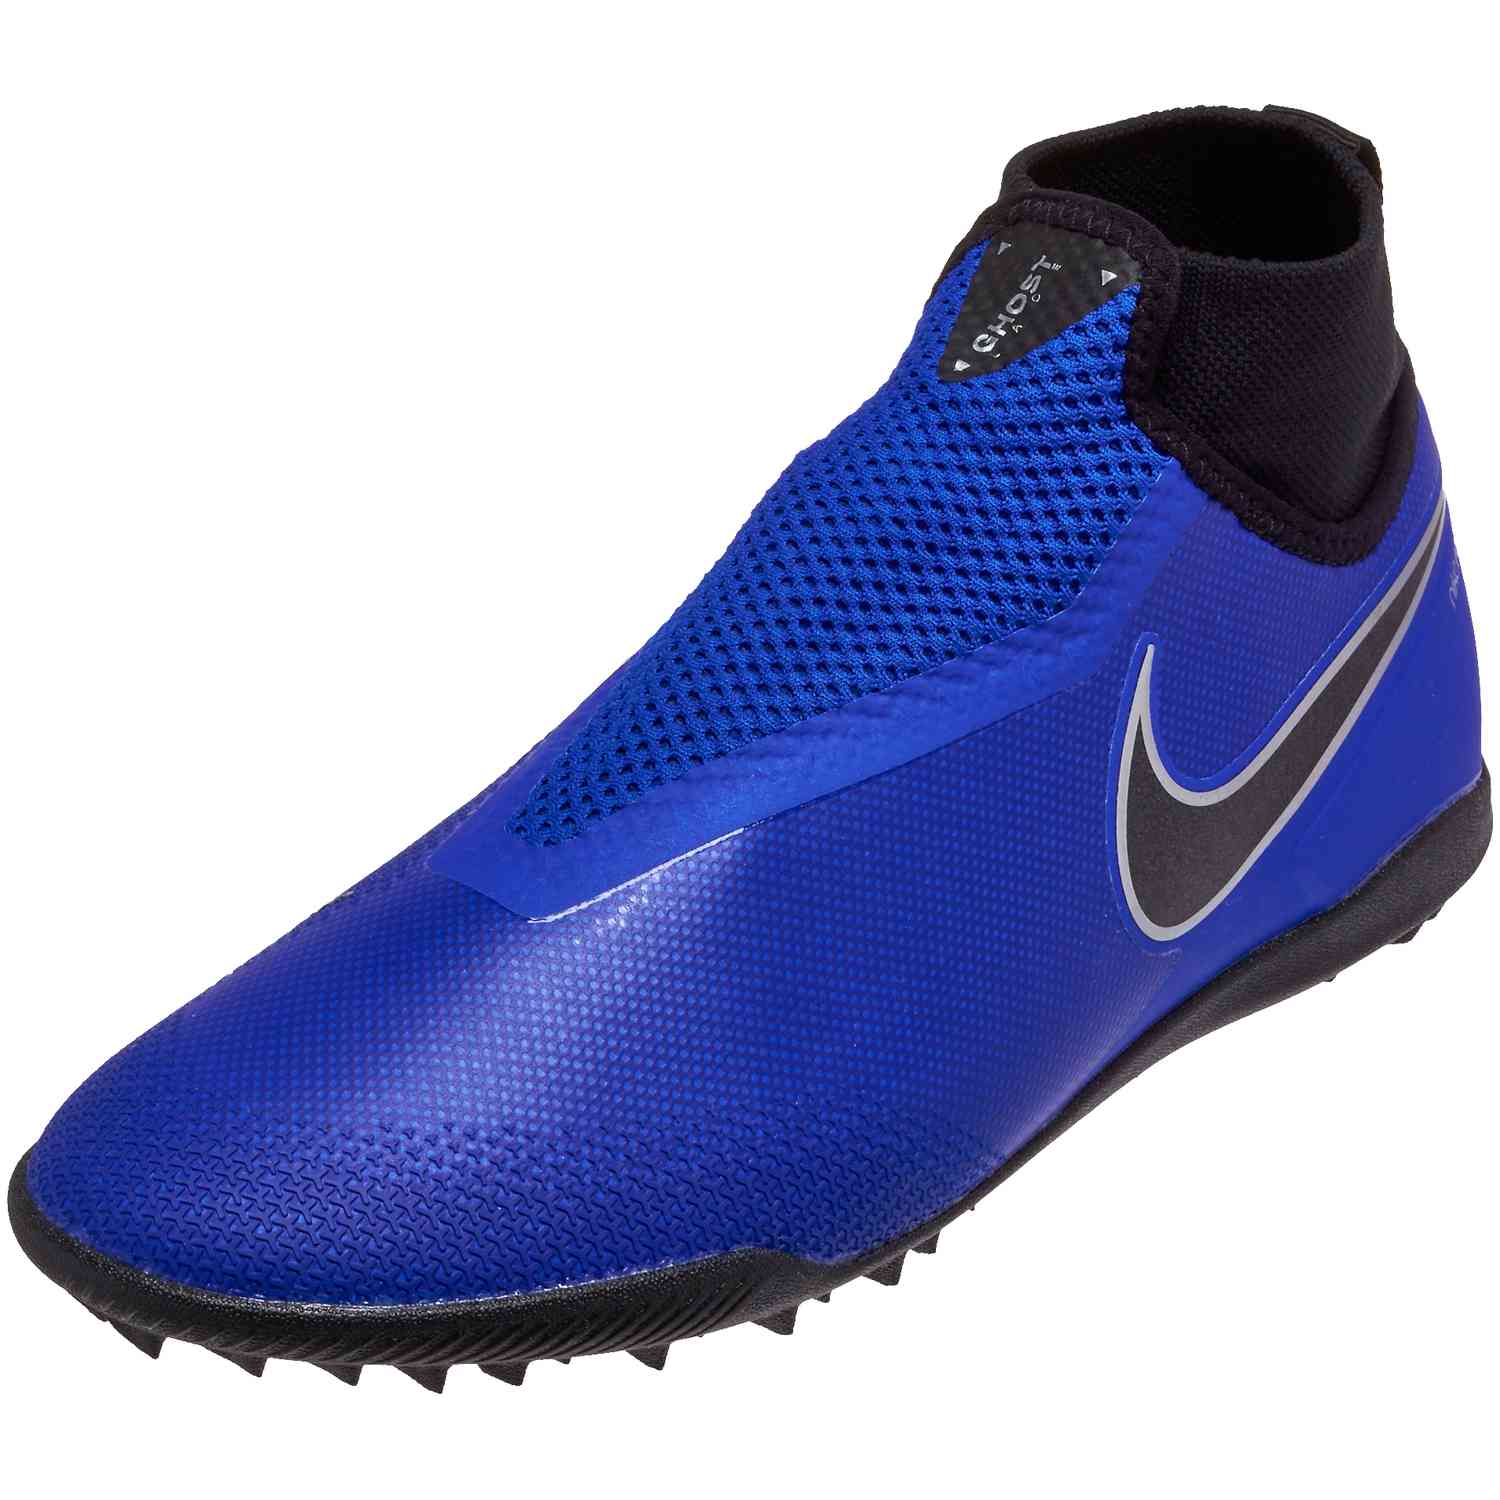 Nike Phantom Vision Pro TF - Racer Blue/Black/Metallic Silver/Volt